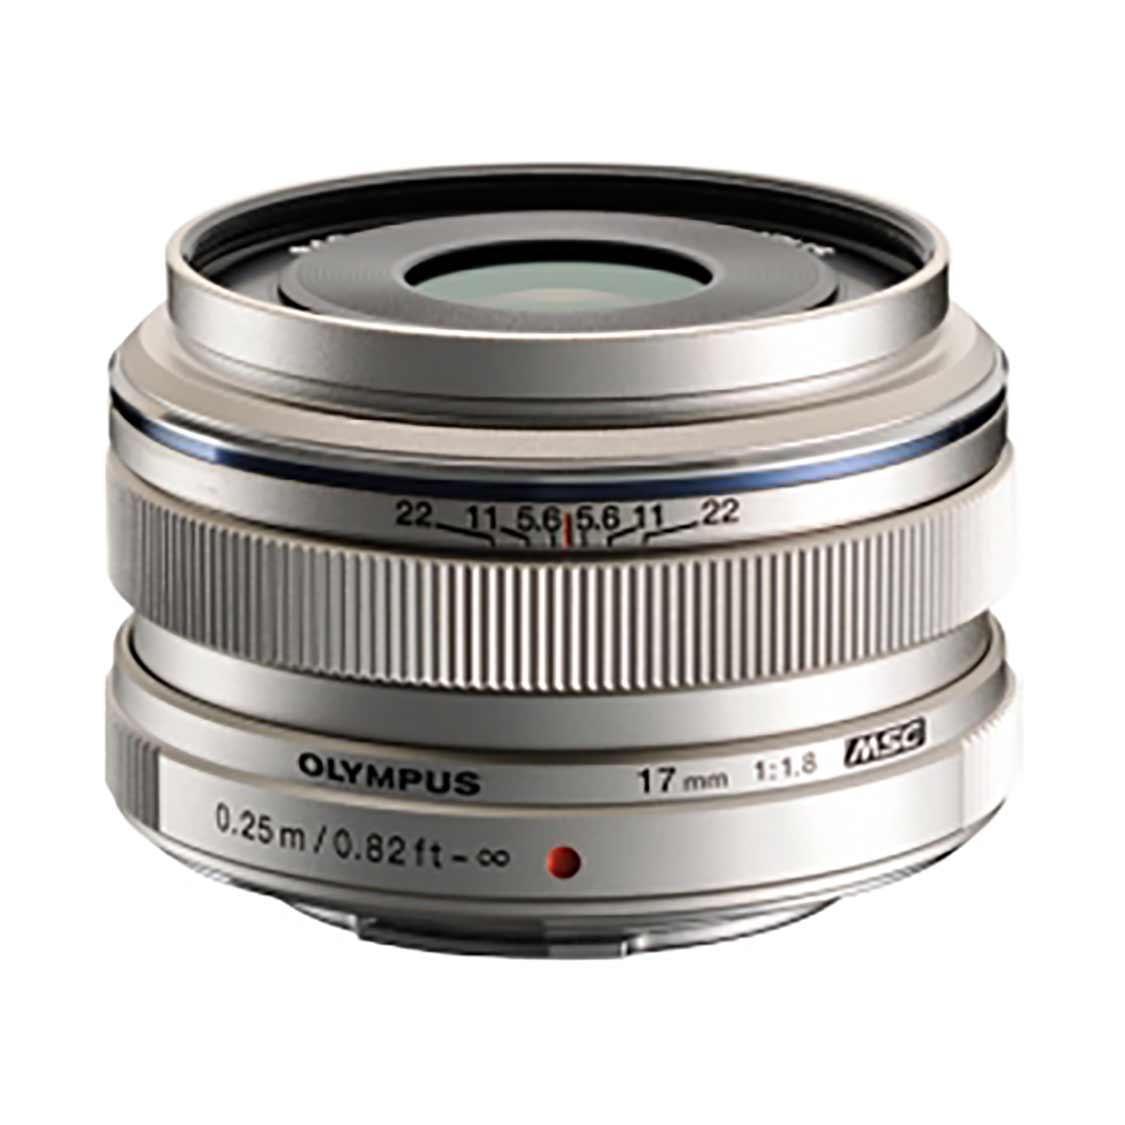 Olympus PEN MSC 17mm F1.8 Lens (silver)